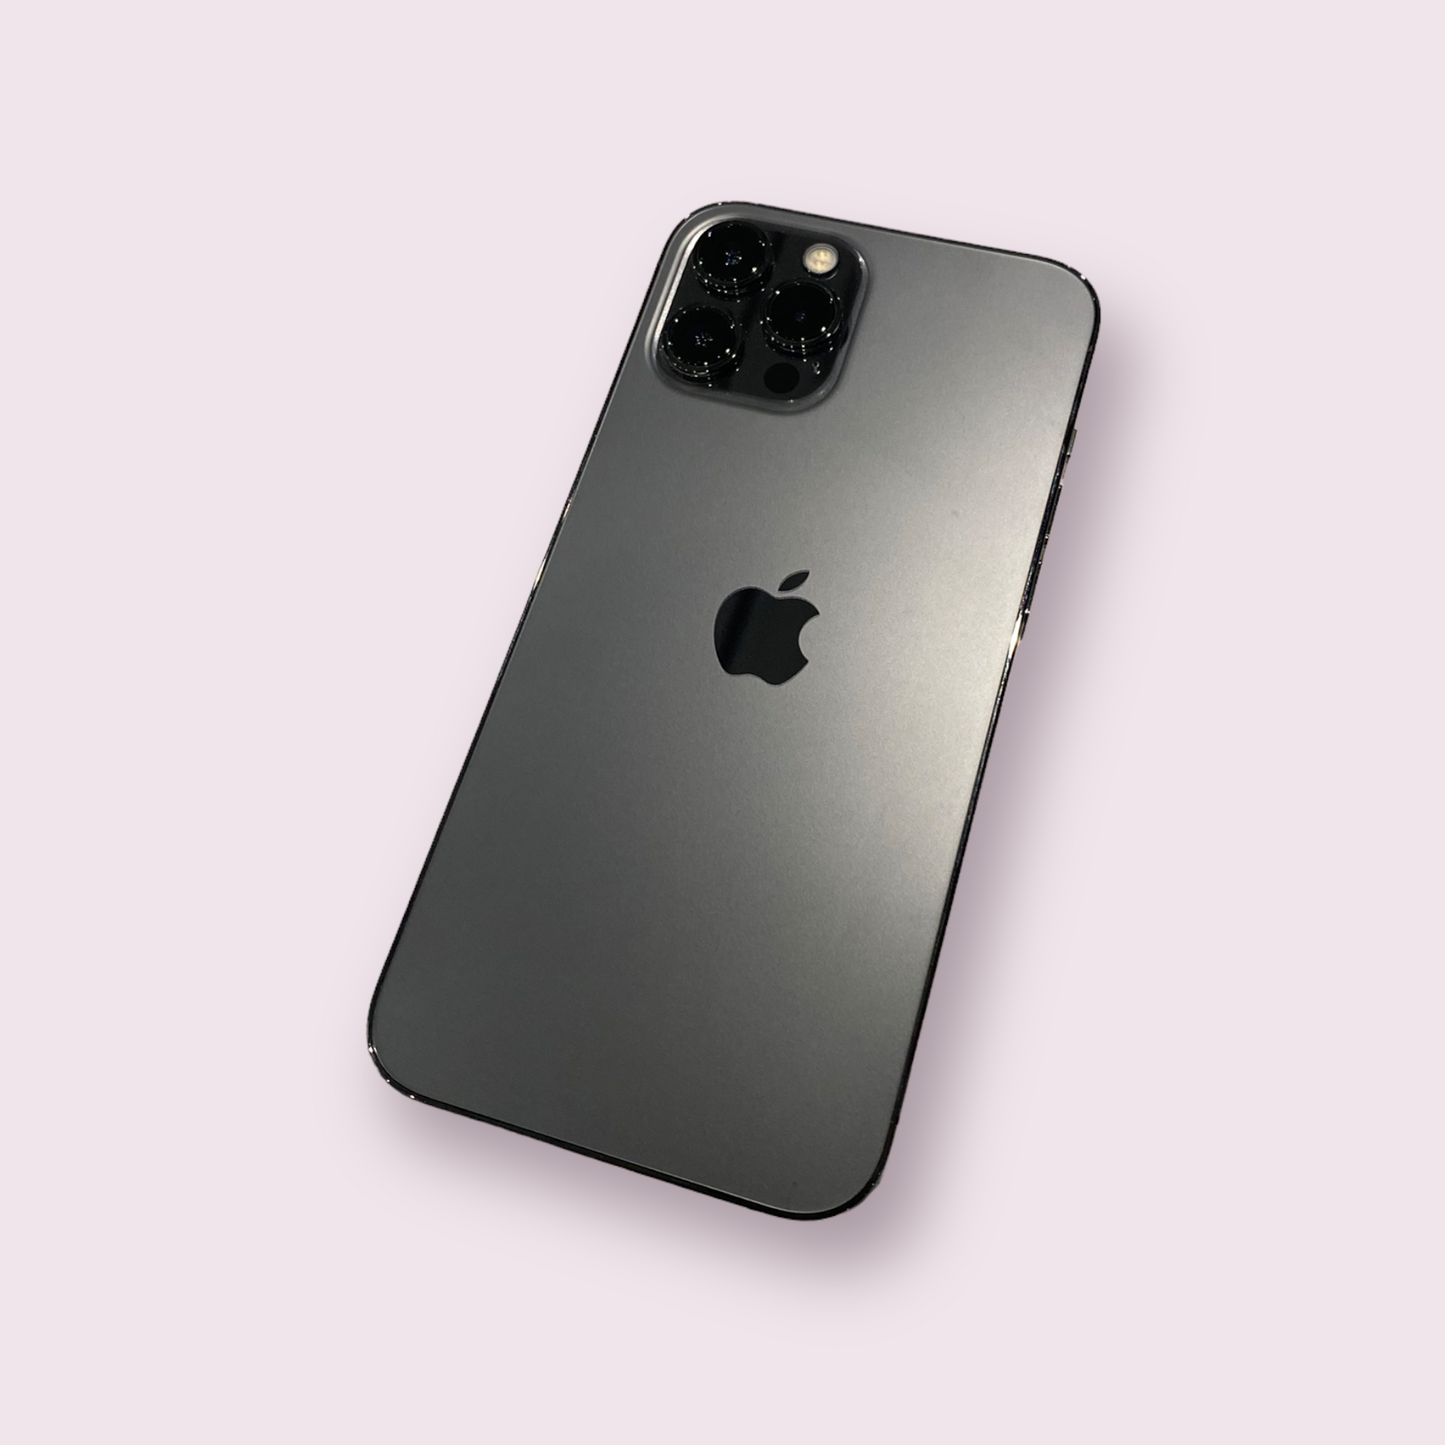 Apple iPhone 12 Pro Max 512GB Graphite - Unlocked - Grade A